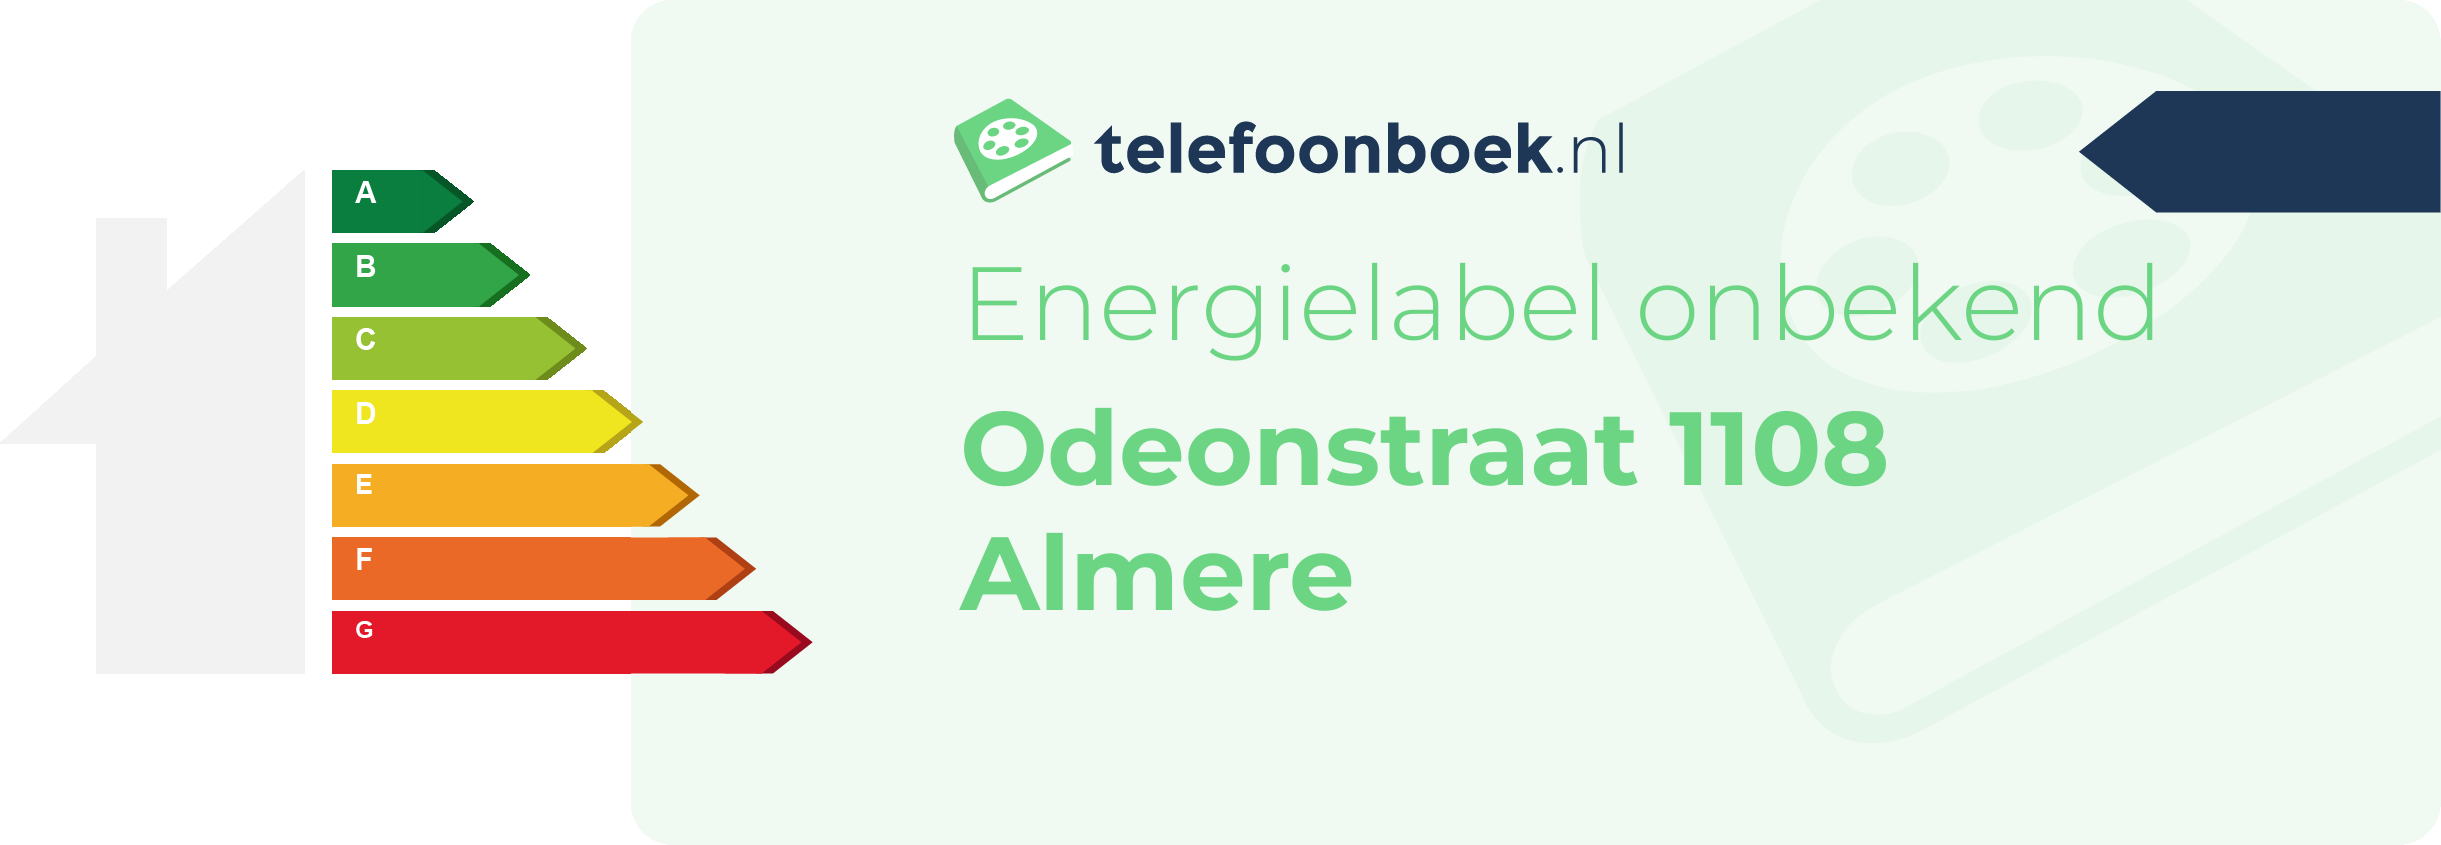 Energielabel Odeonstraat 1108 Almere